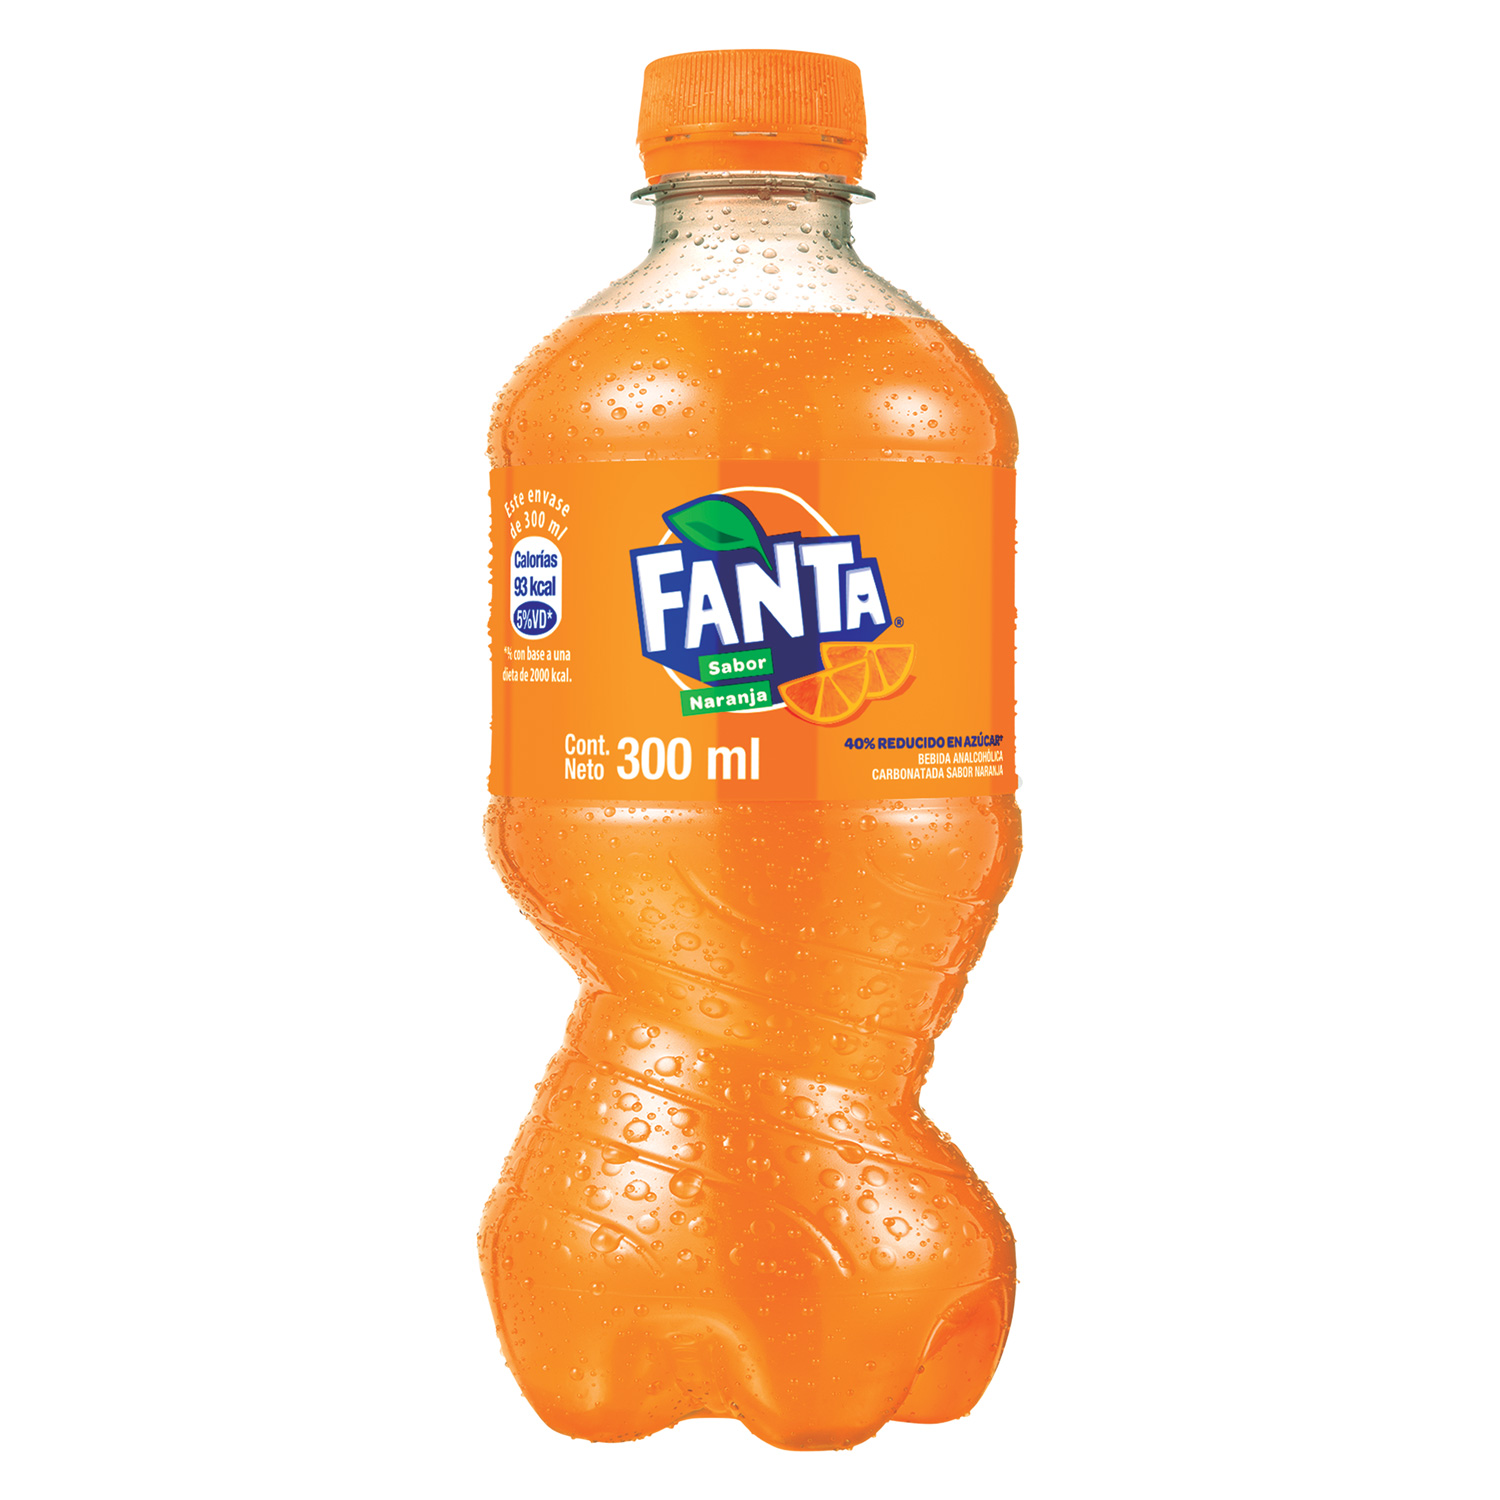 Botella de Fanta Naranja 300mL